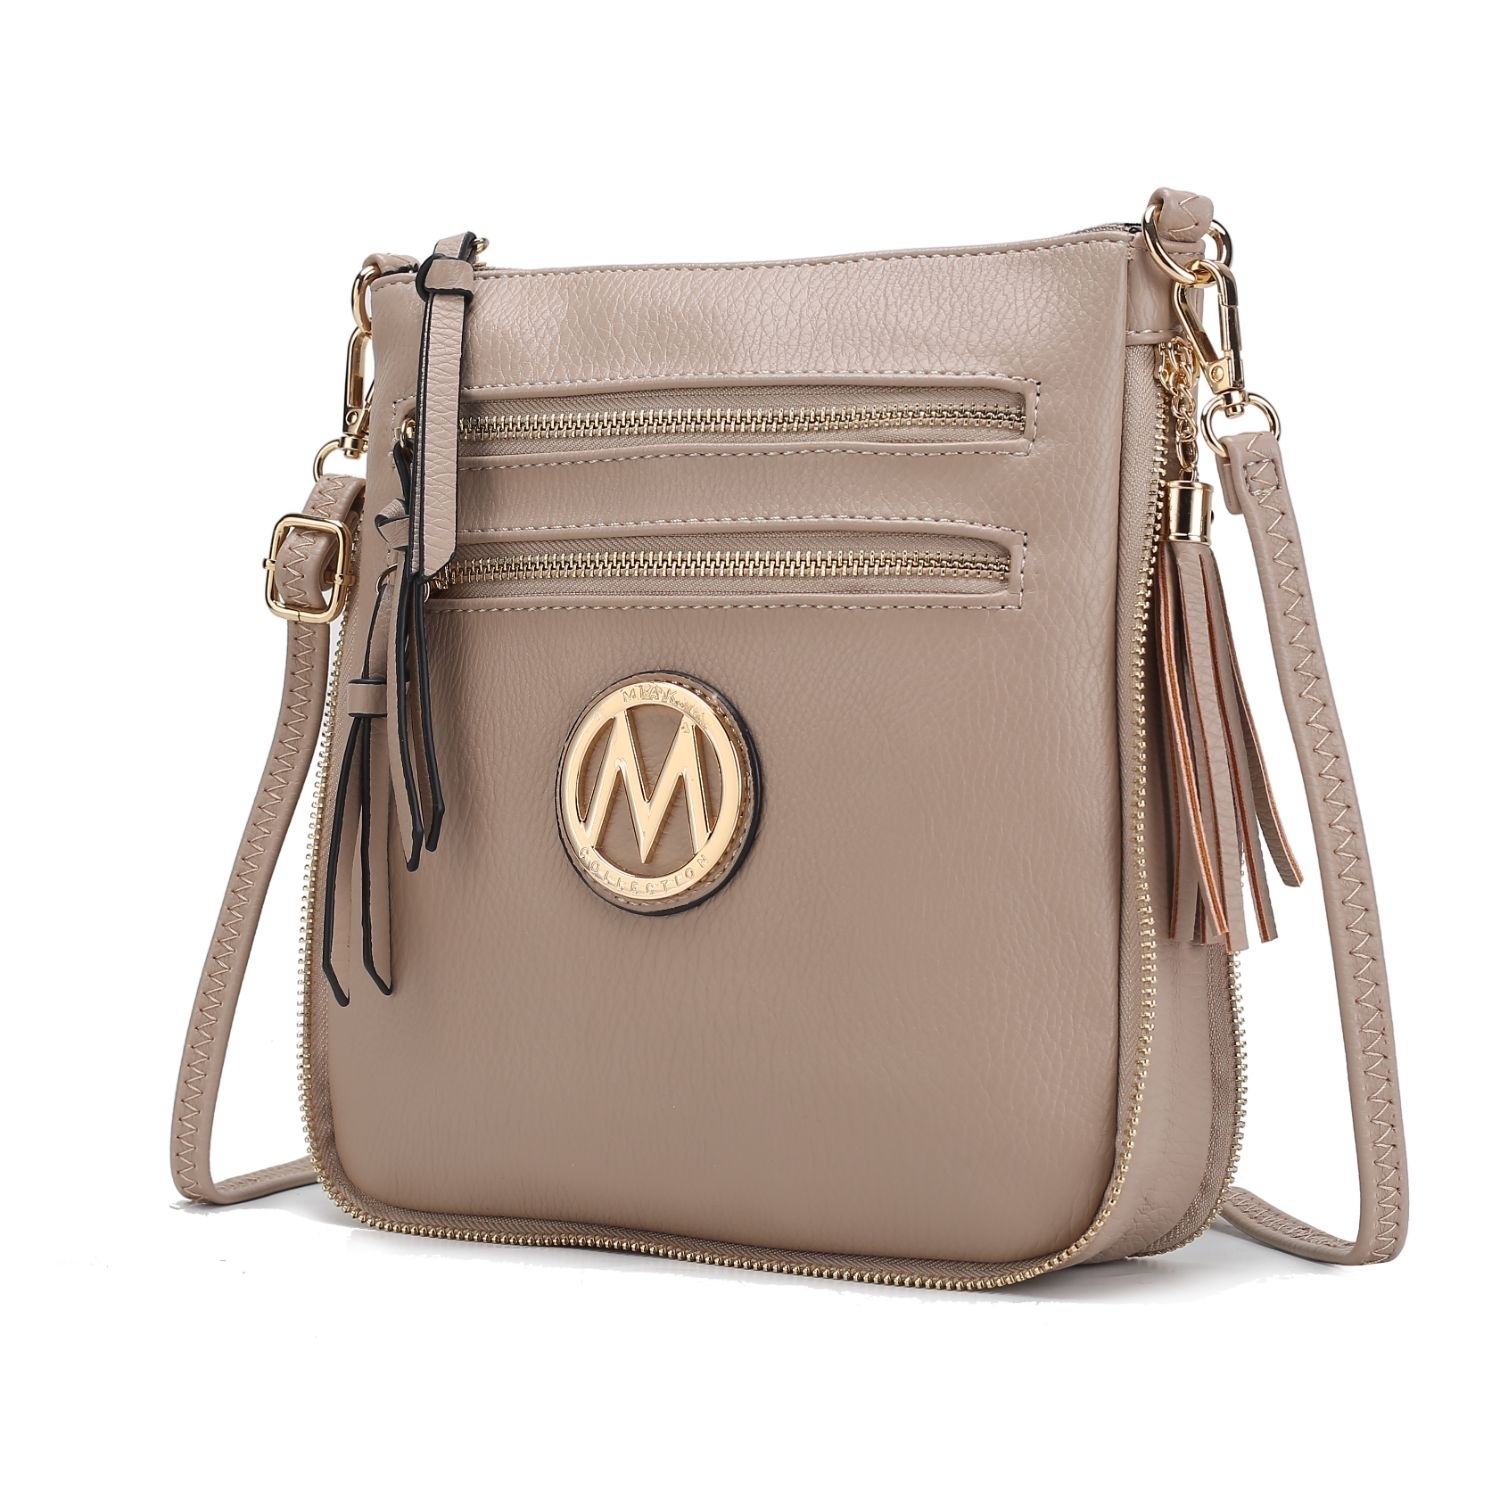 MKF Collection Angelina Vegan Leather Crossbody Handbag By Mia K. - Red